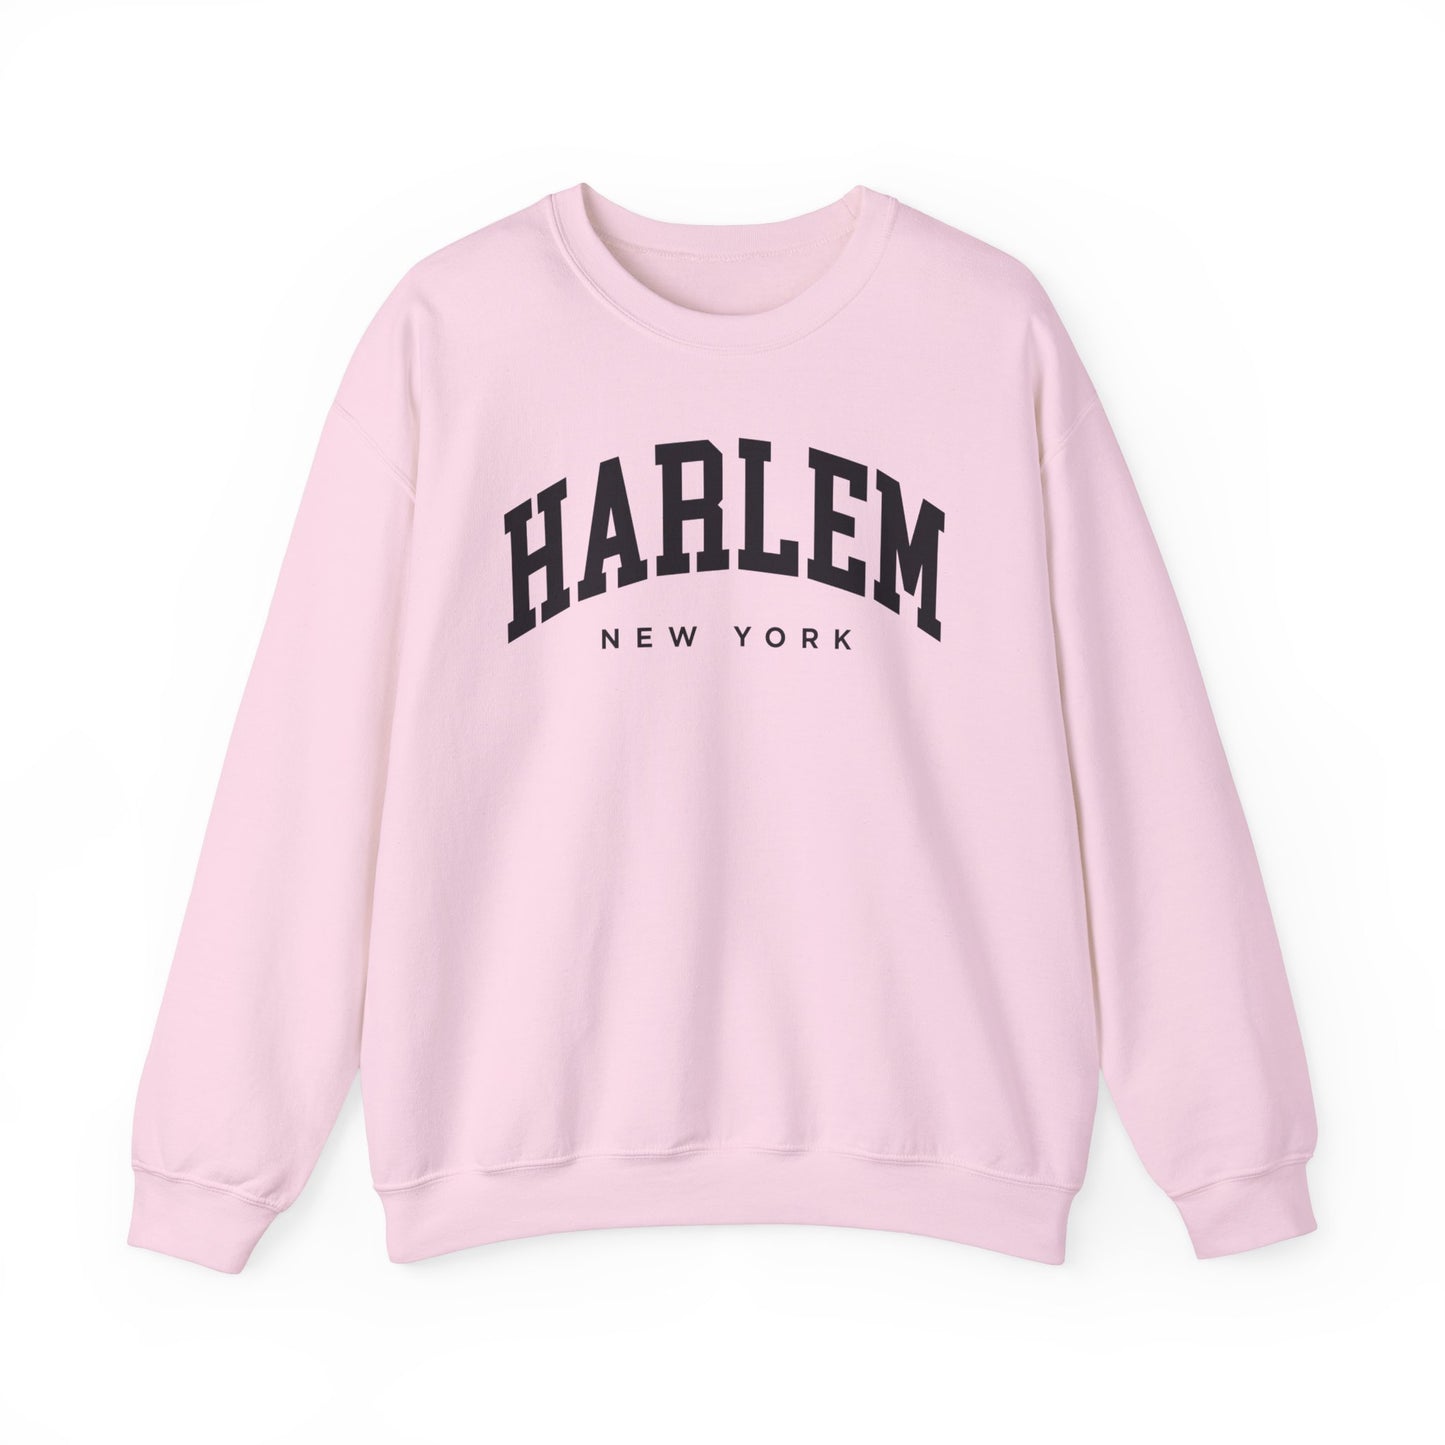 Harlem New York Sweatshirt